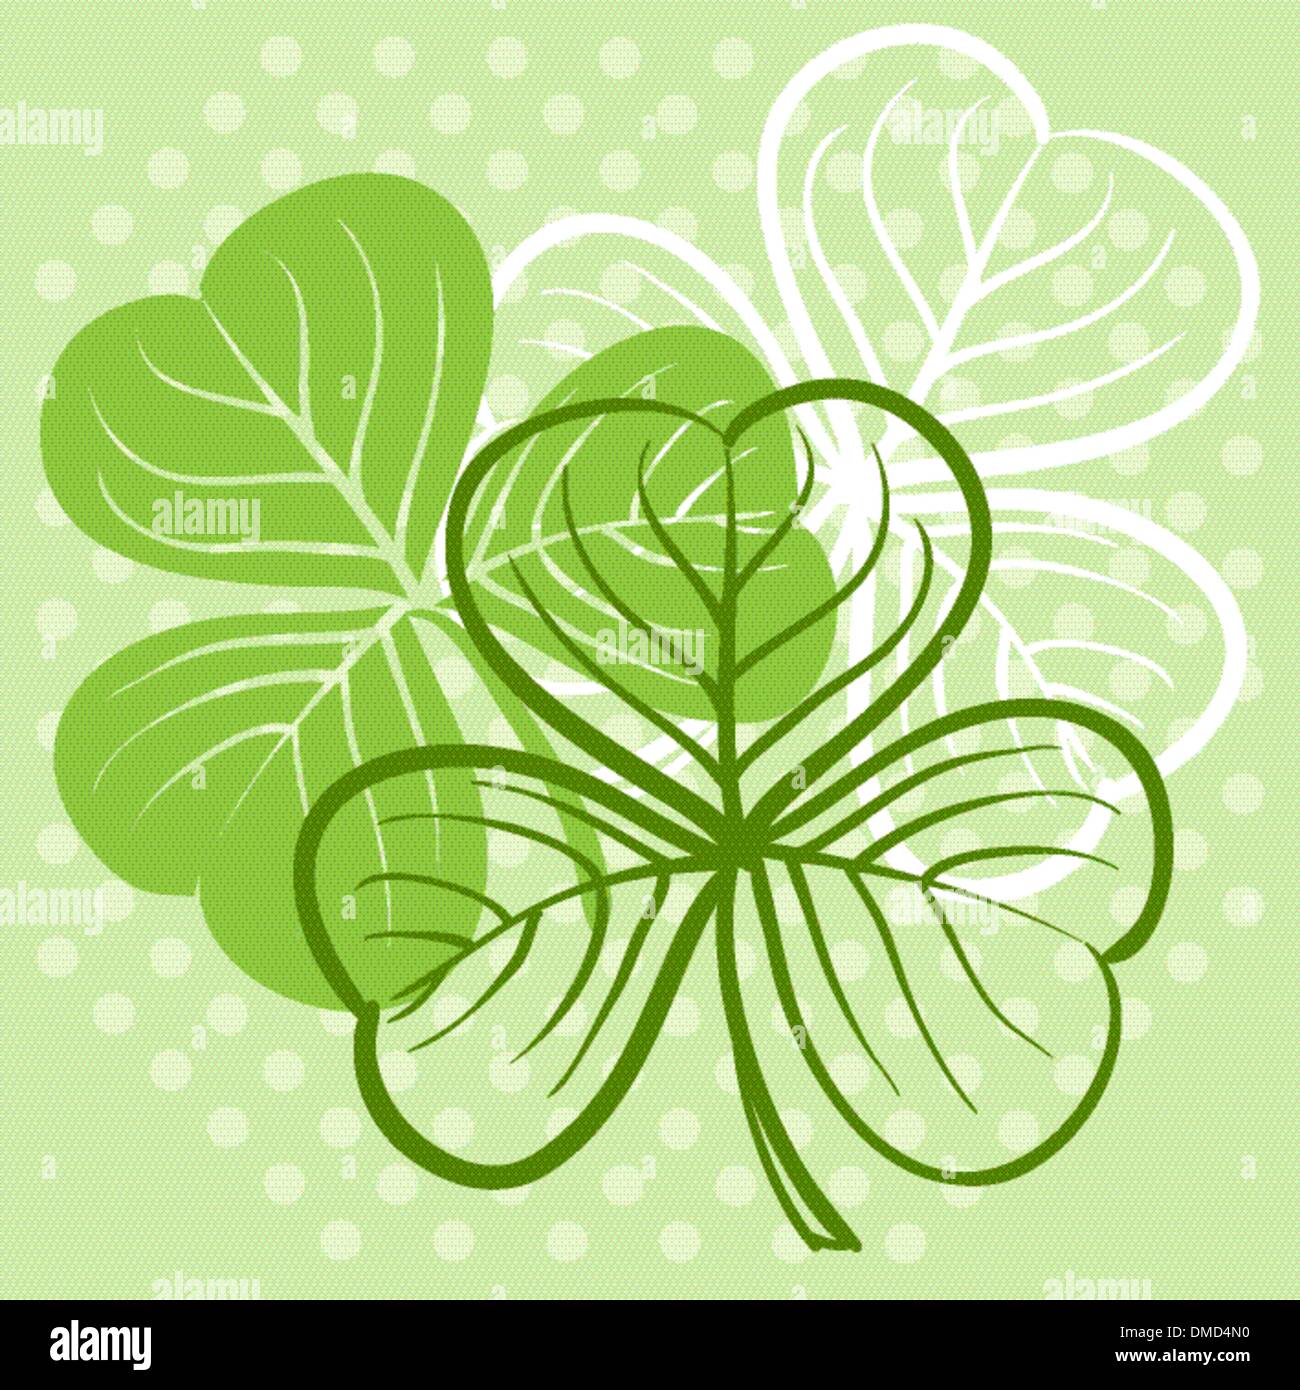 3 leaf clover logo quiz